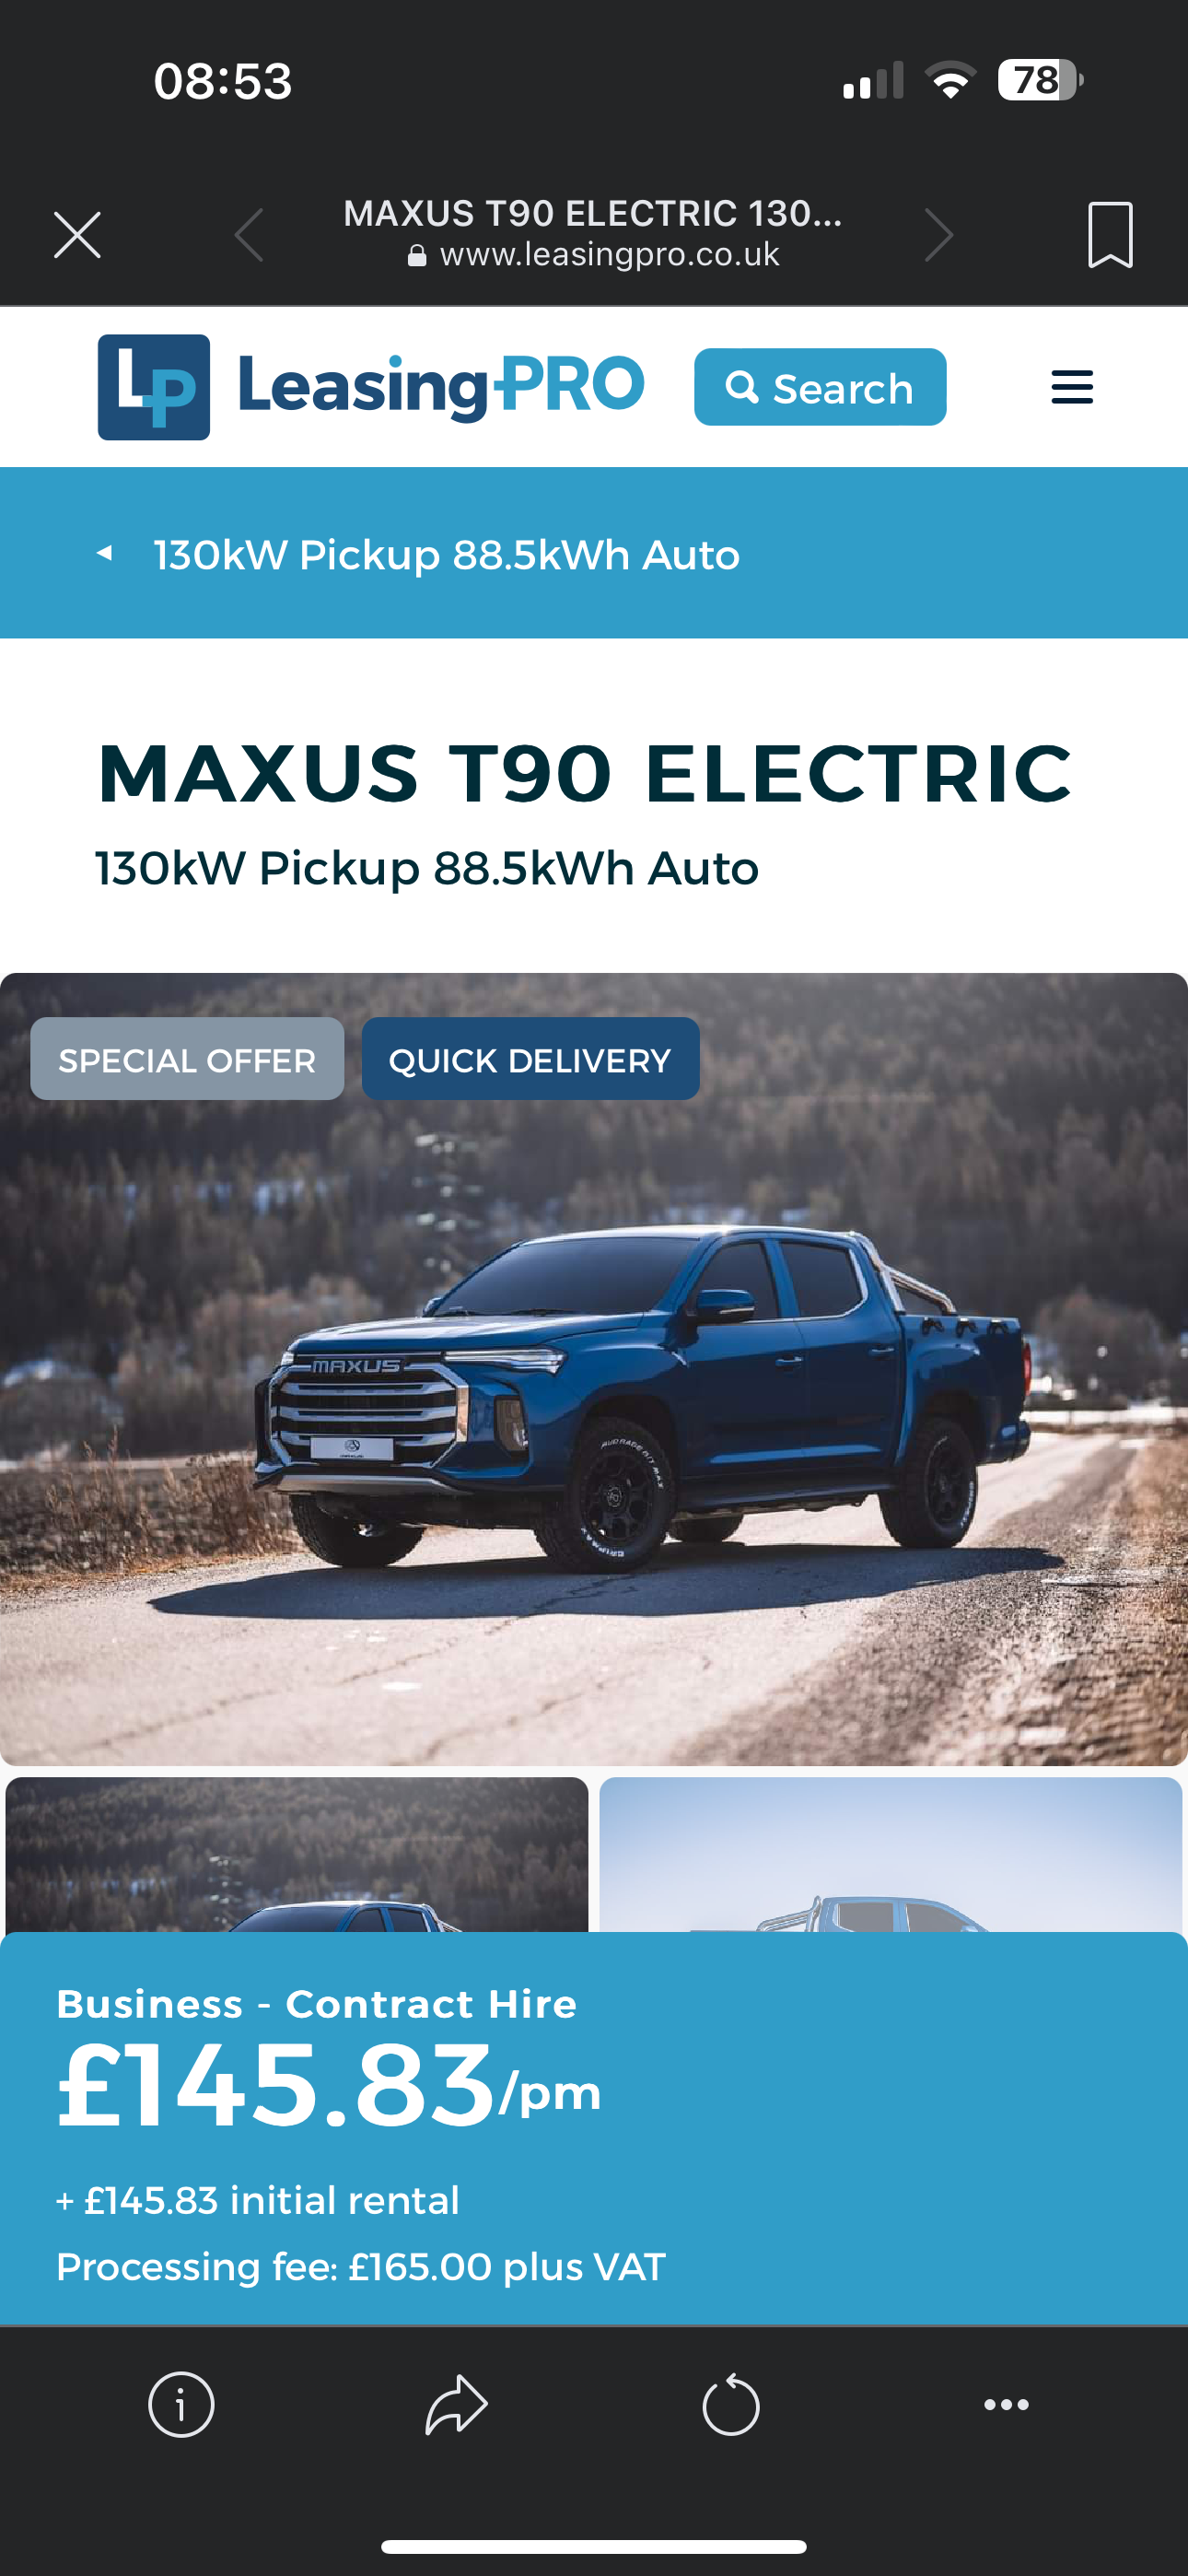 Maxus T90EV - Page 1 - EV and Alternative Fuels - PistonHeads UK